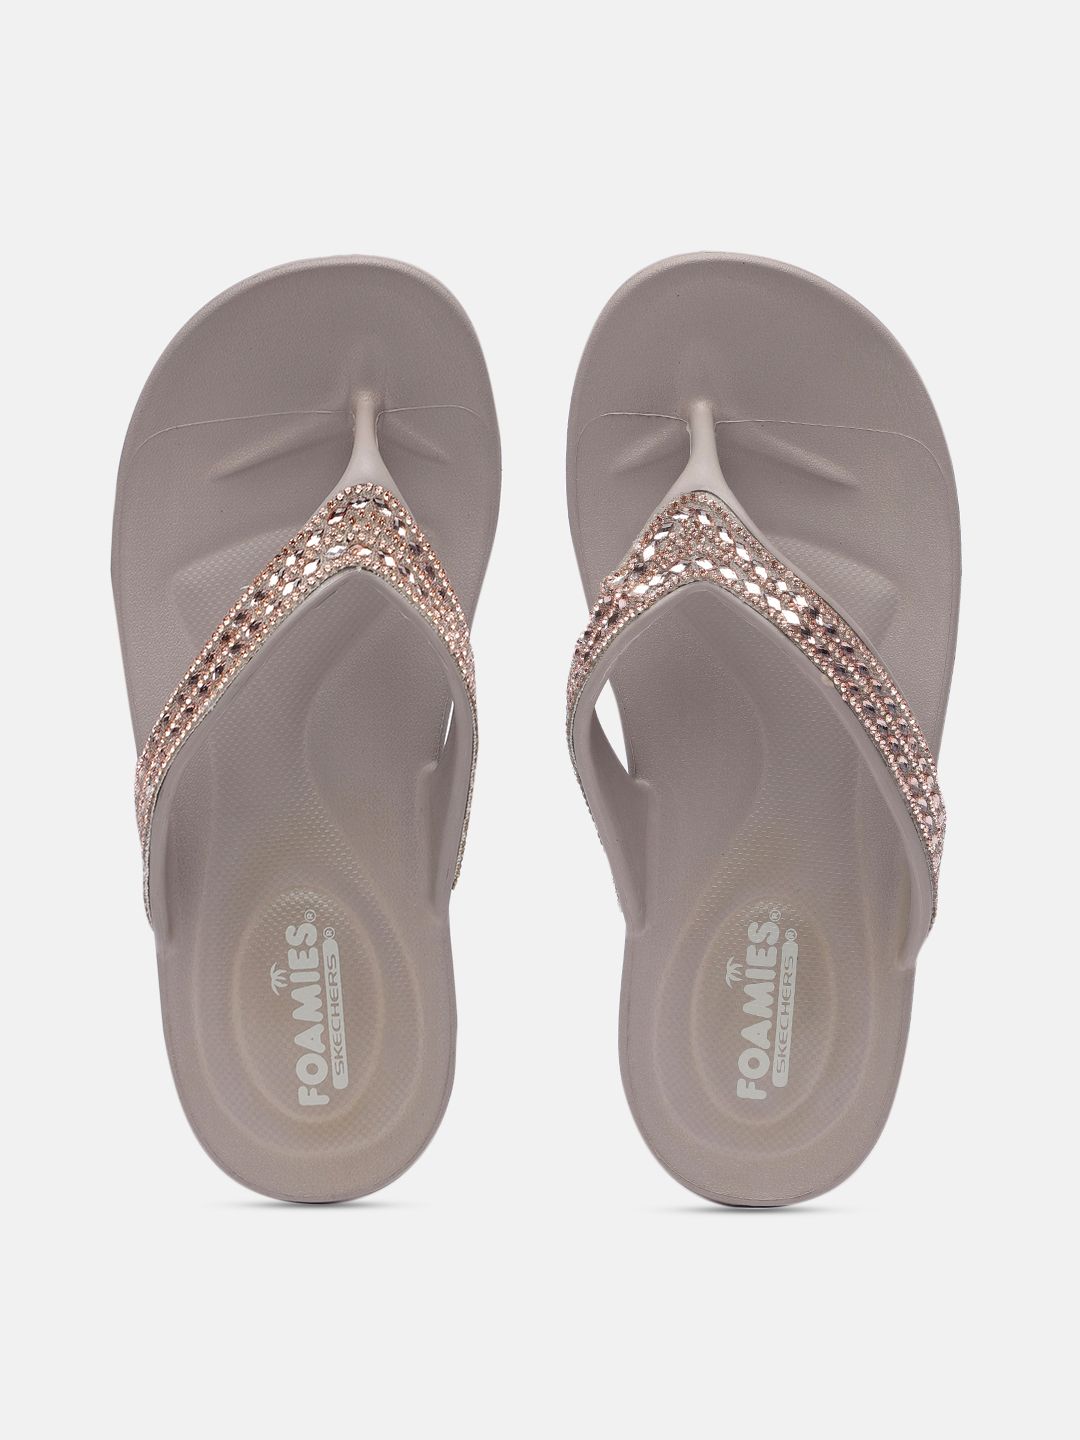 Skechers Women Glitzy Embellished Open Toe Flats Price in India